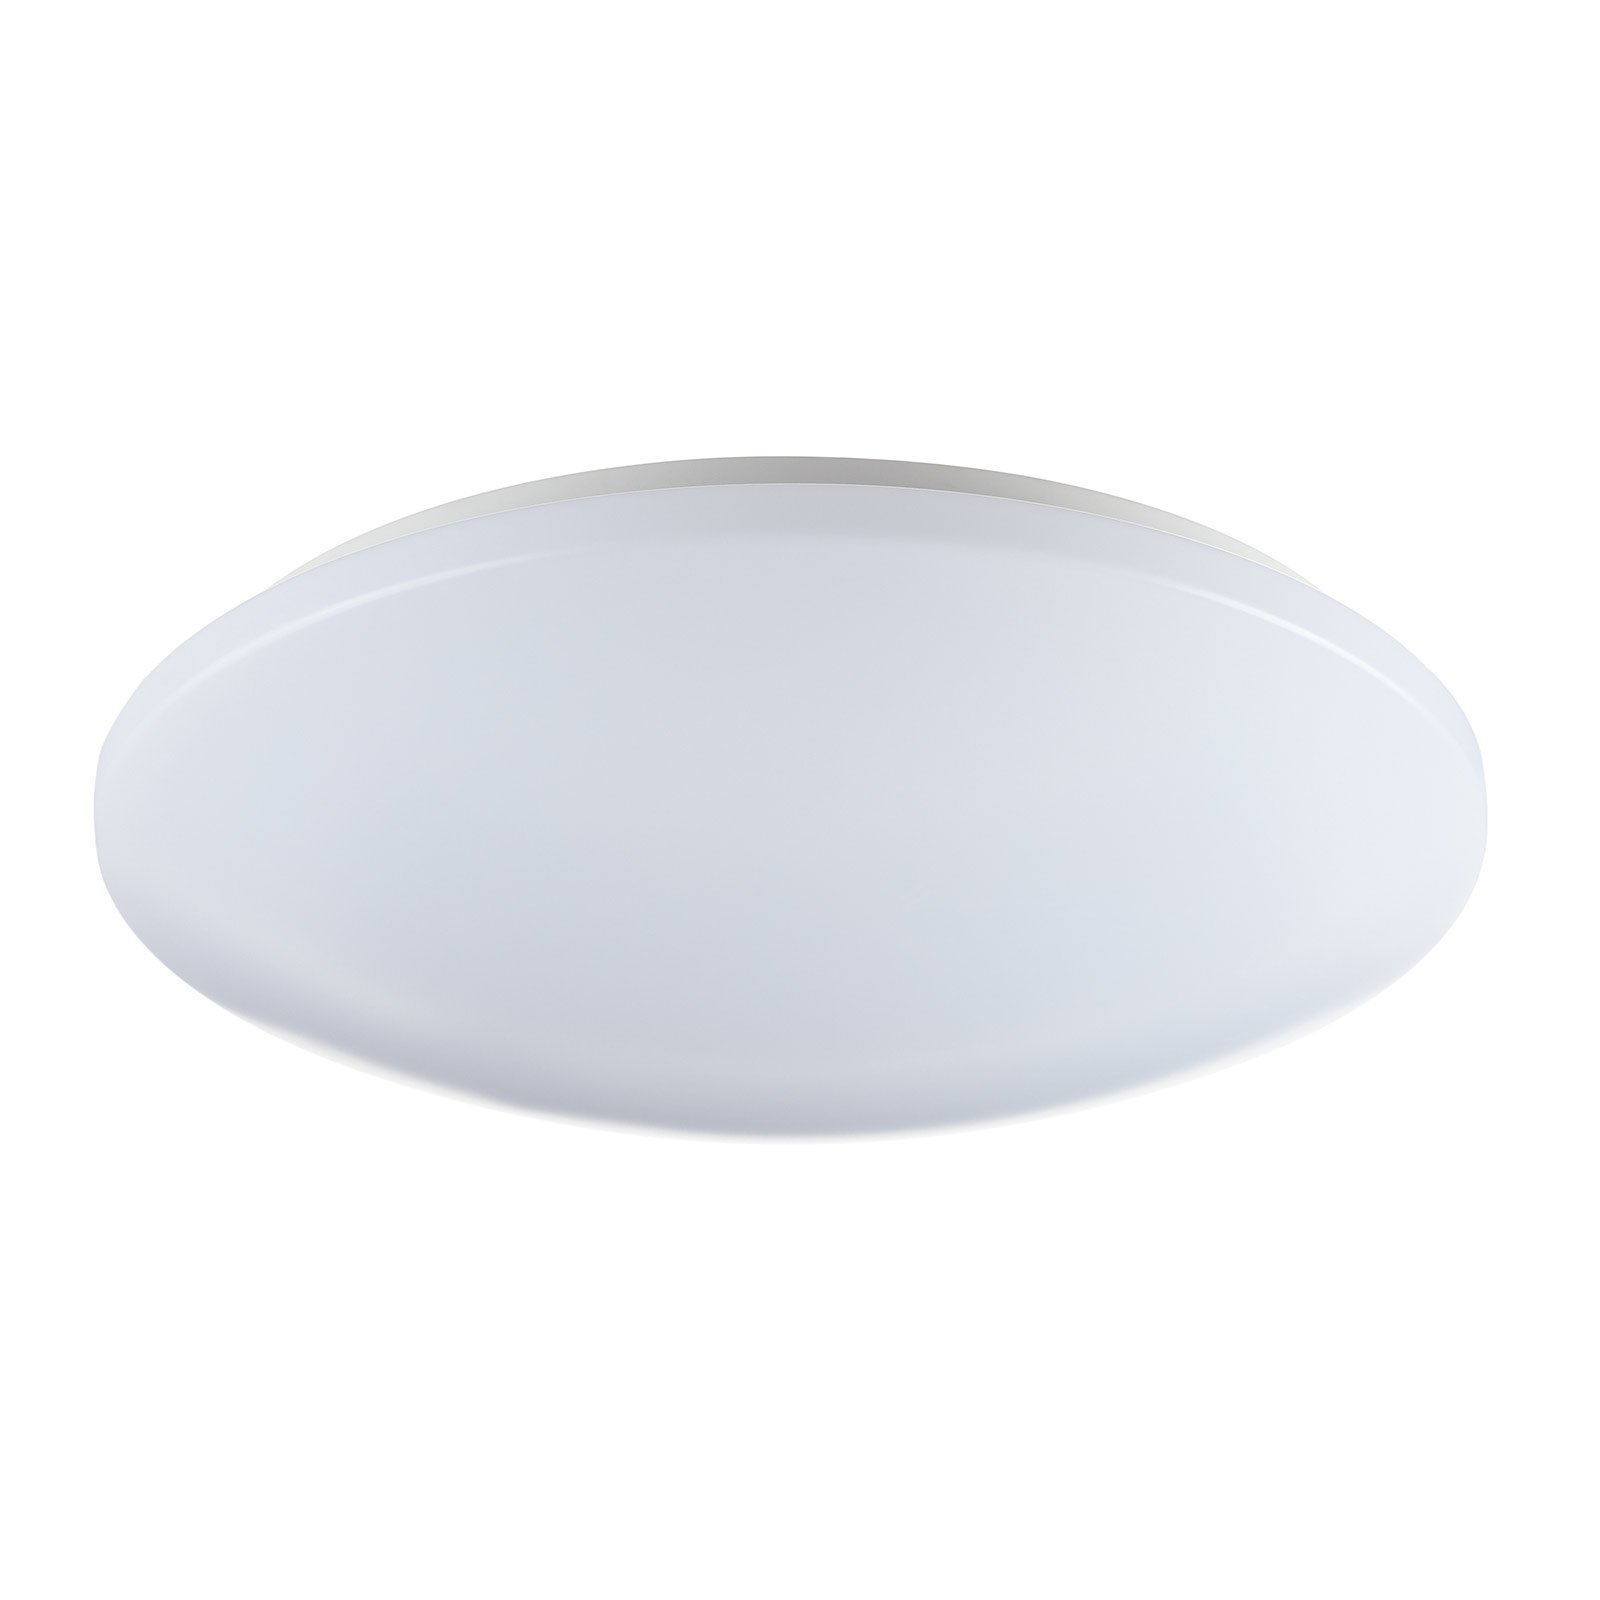 Pollux LED ceiling light, motion detector, Ø 40 cm